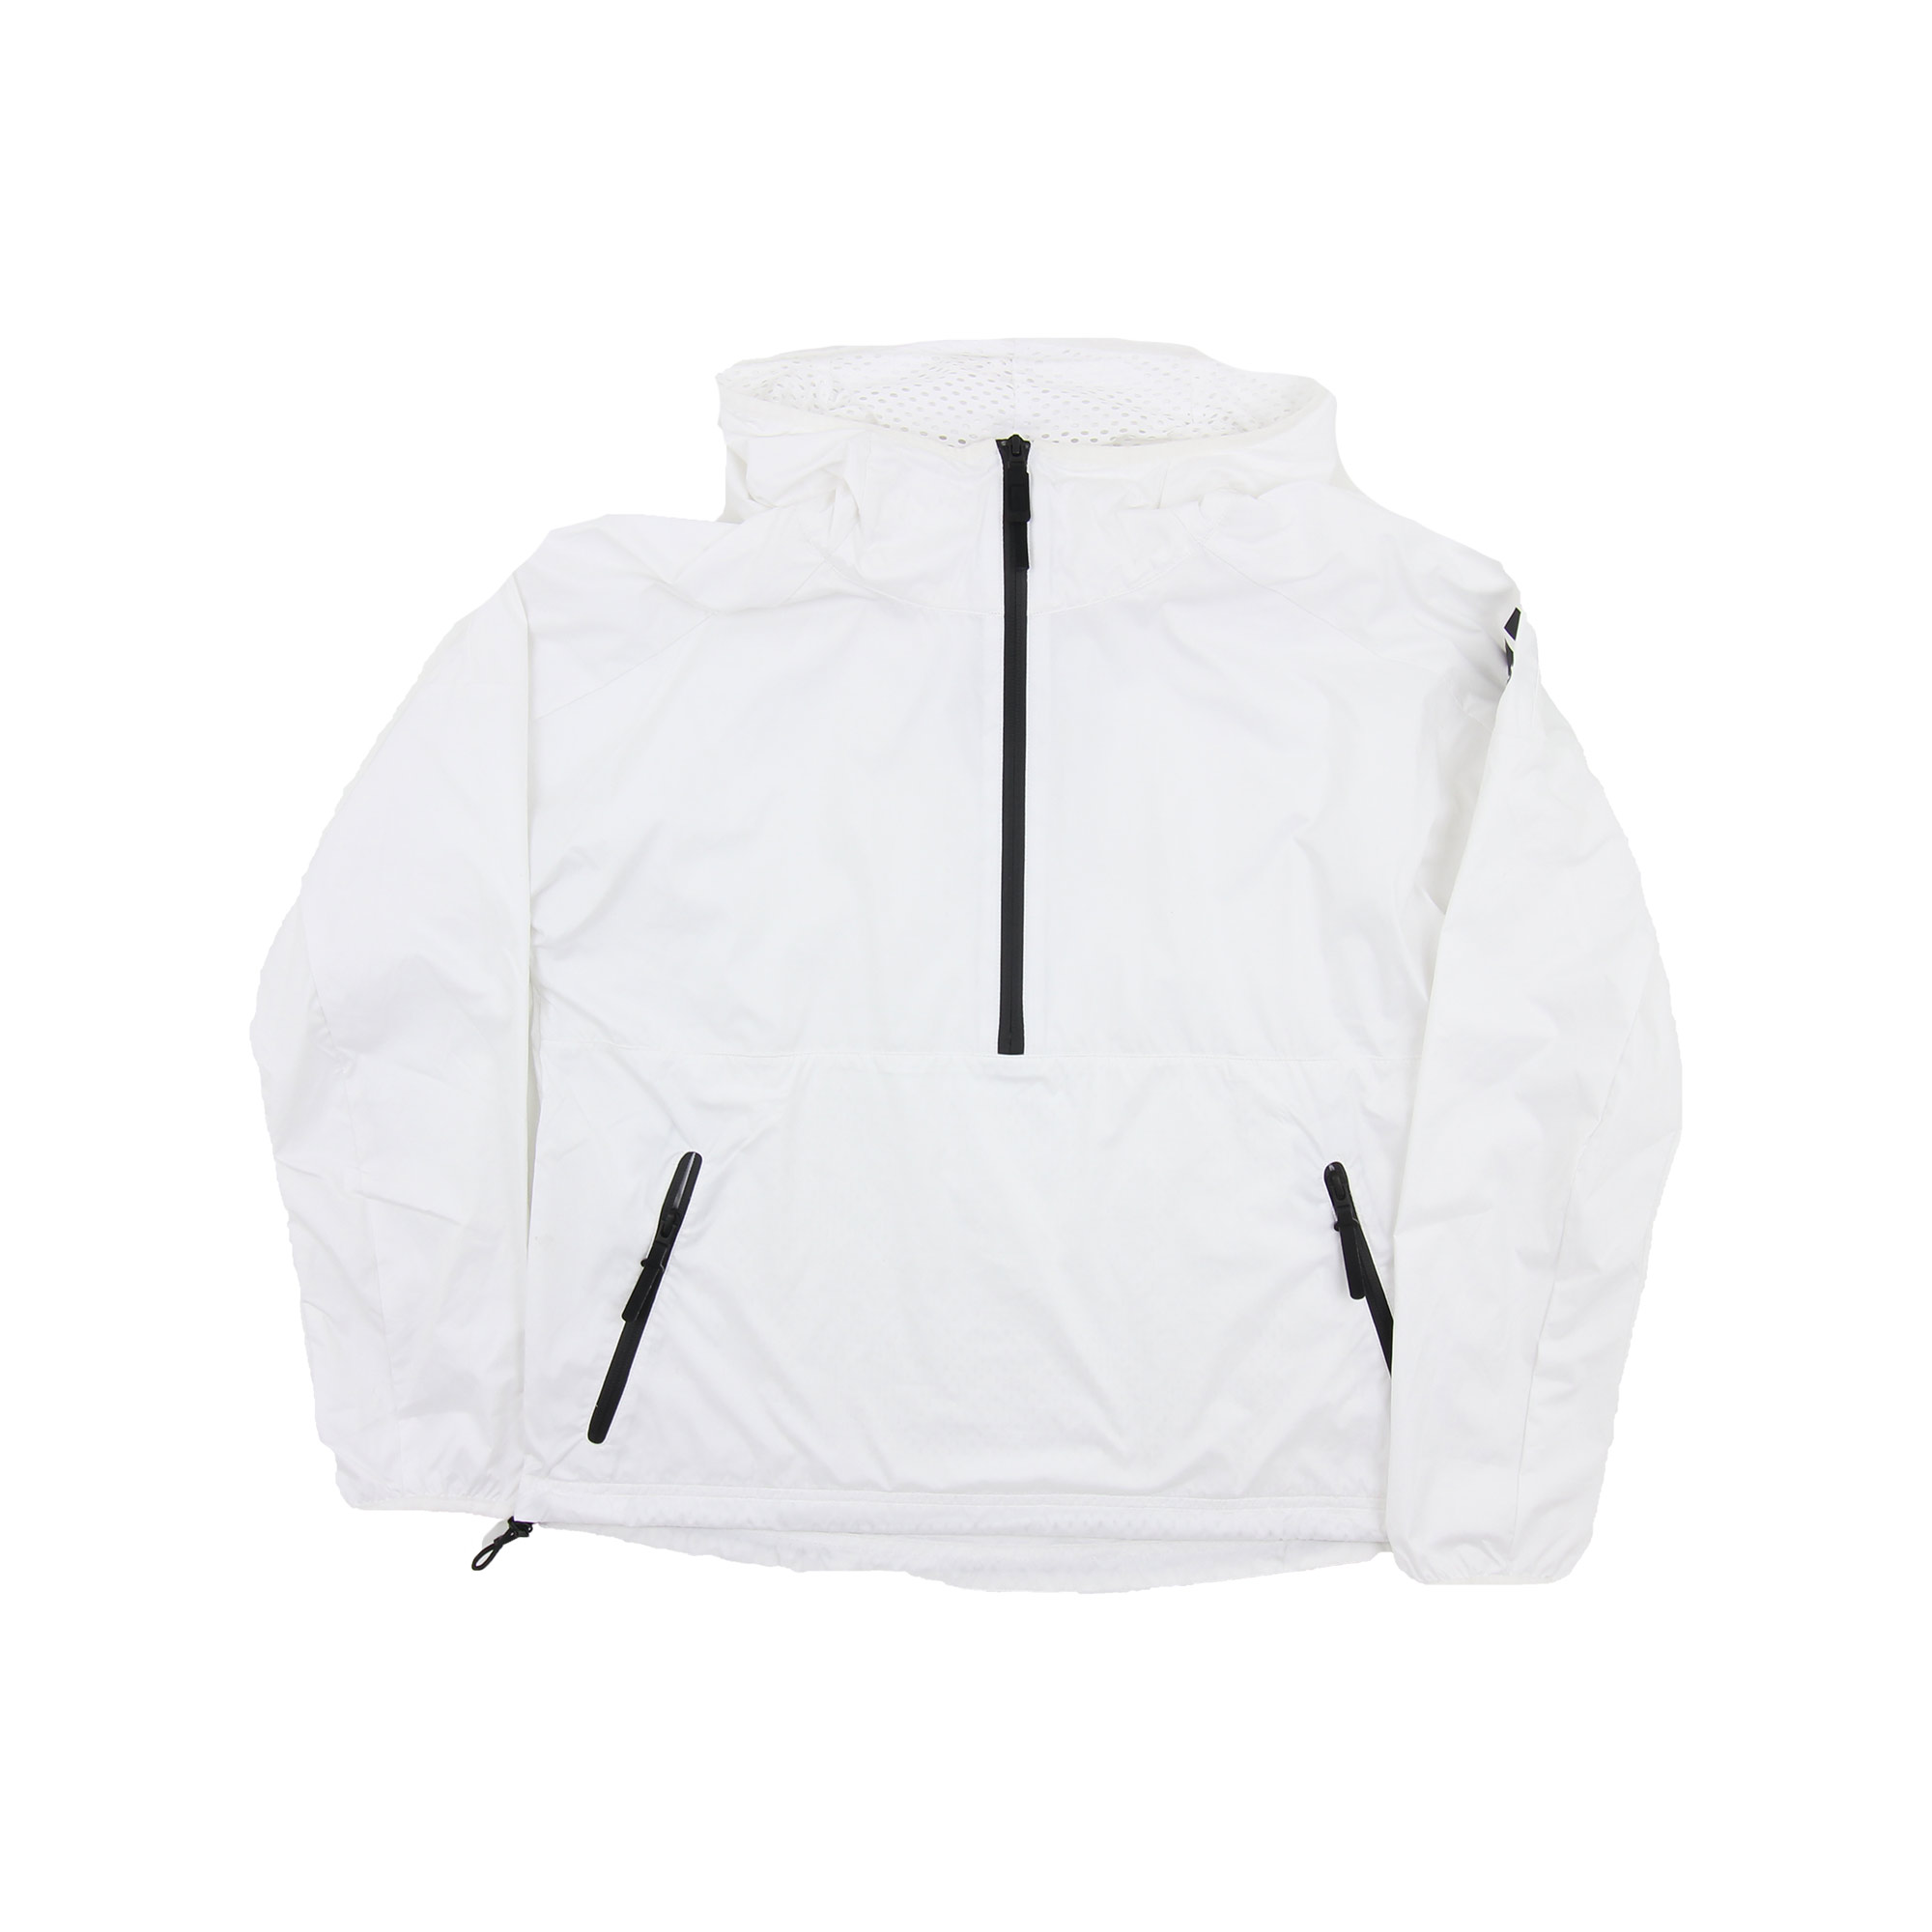 Adidas Half Zip White Rainjacket - S